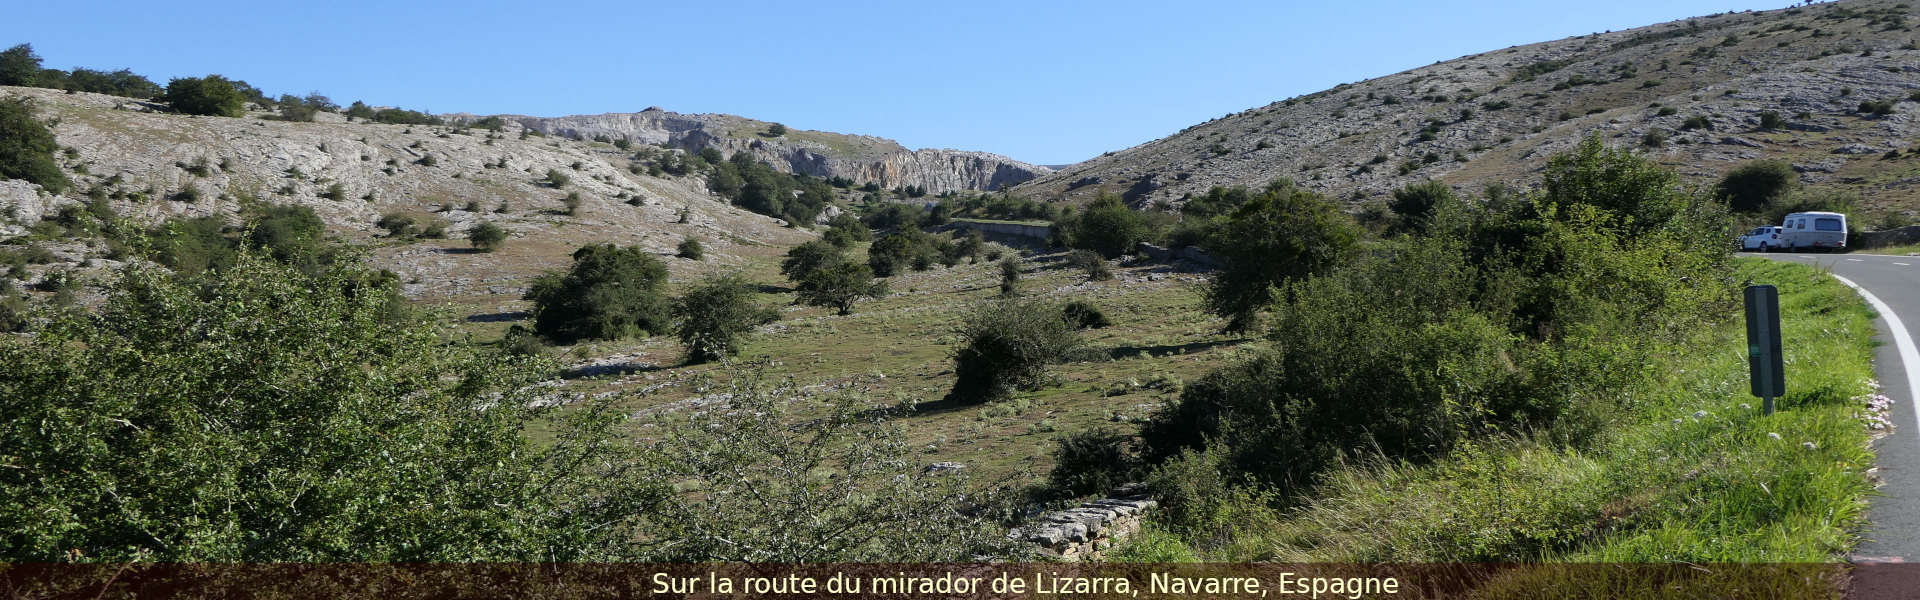 Sur la route du mirador de Lizarra, Navarre, Espagne